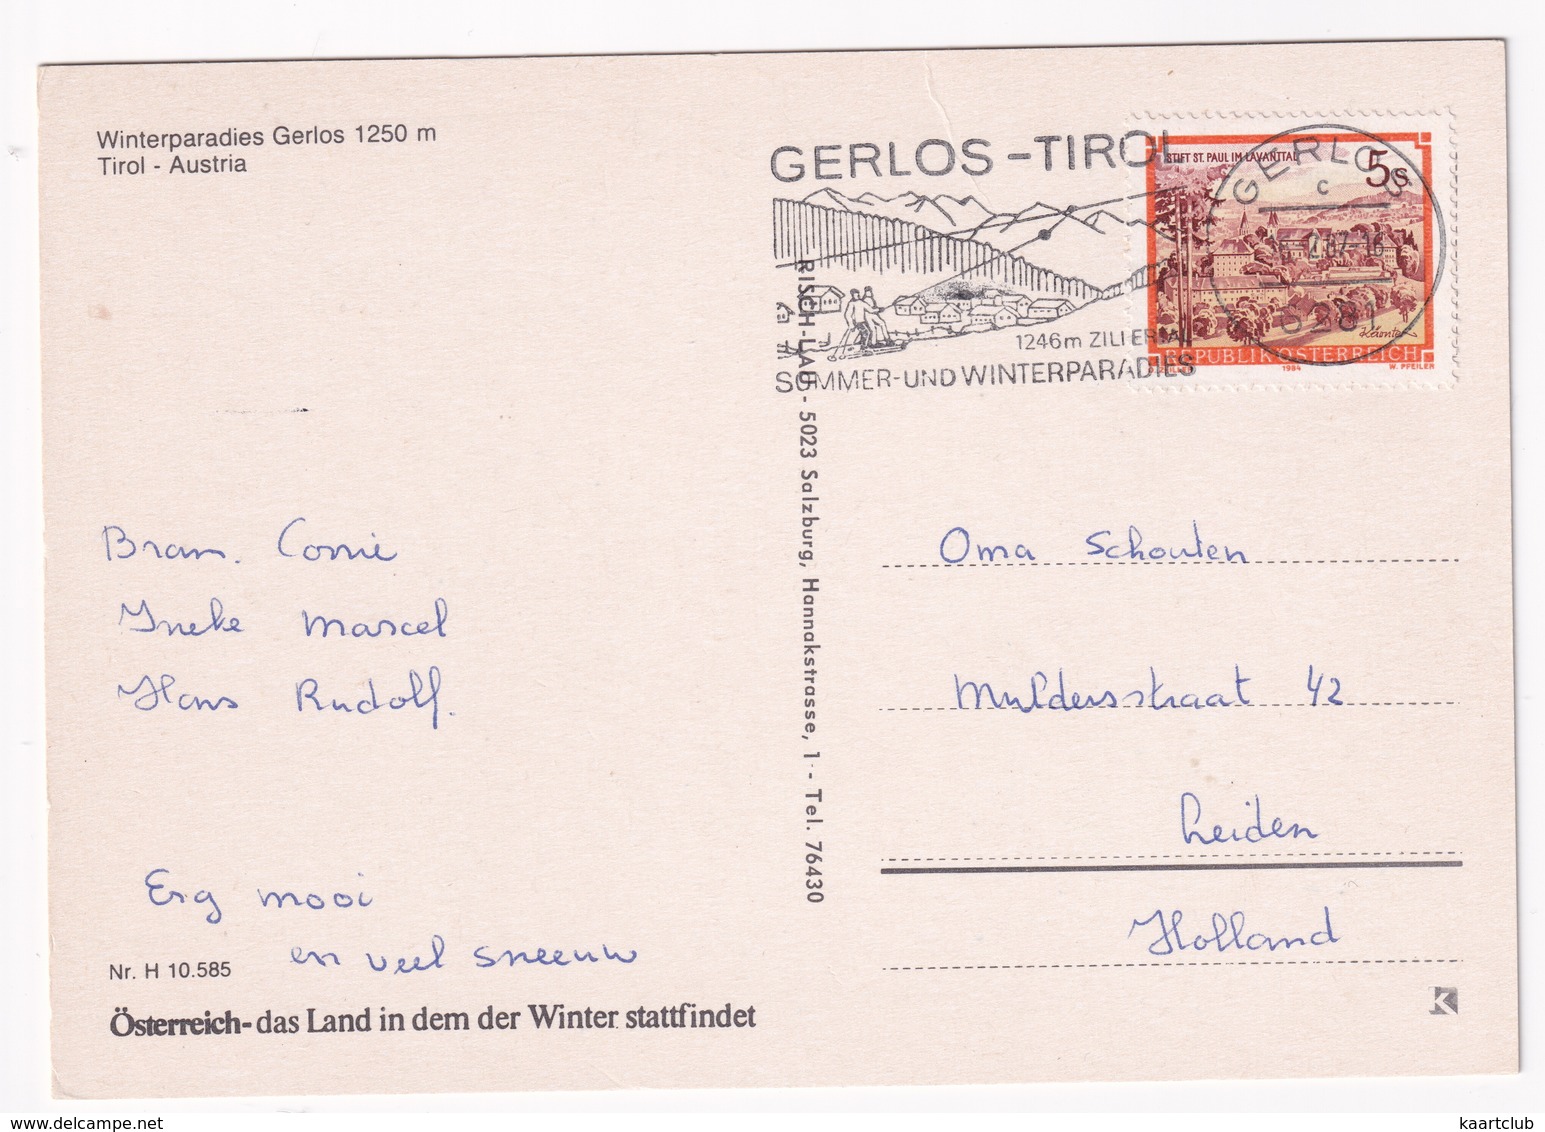 Winterparadies Gerlos 1250 M, Tirol - Austria - Gerlos